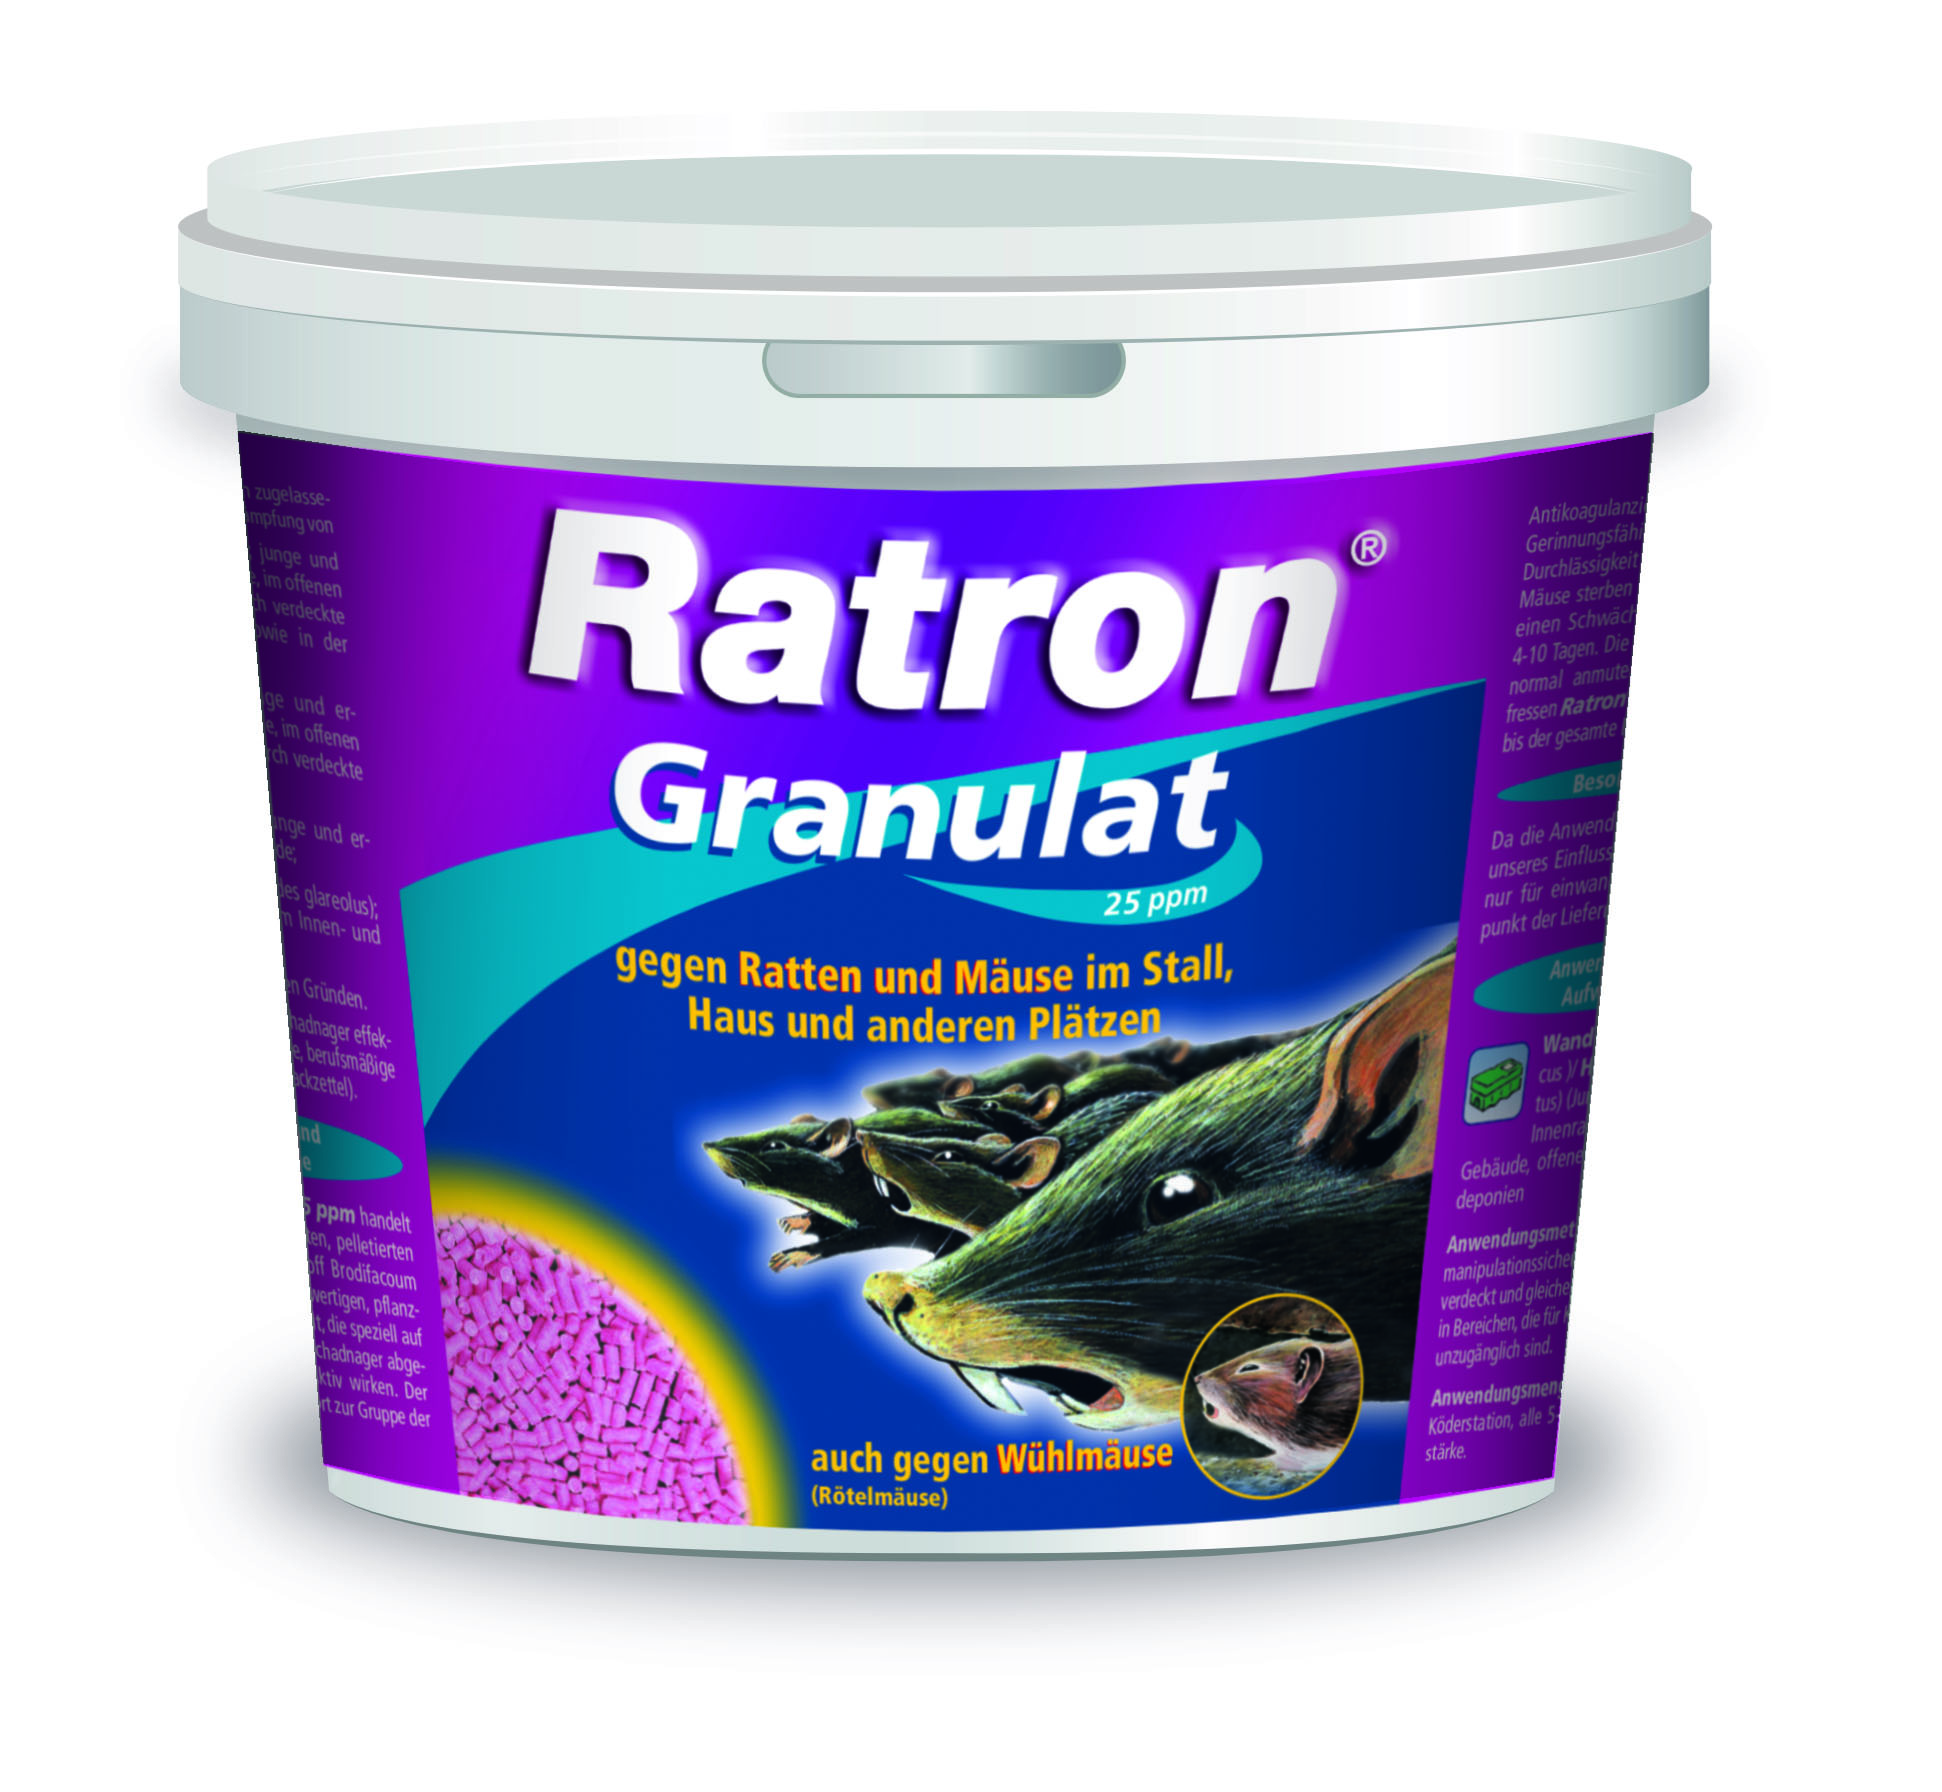 Ratron® Granulat 25 ppm gegen Ratten Mäuse Wühlmäuse 1 kg